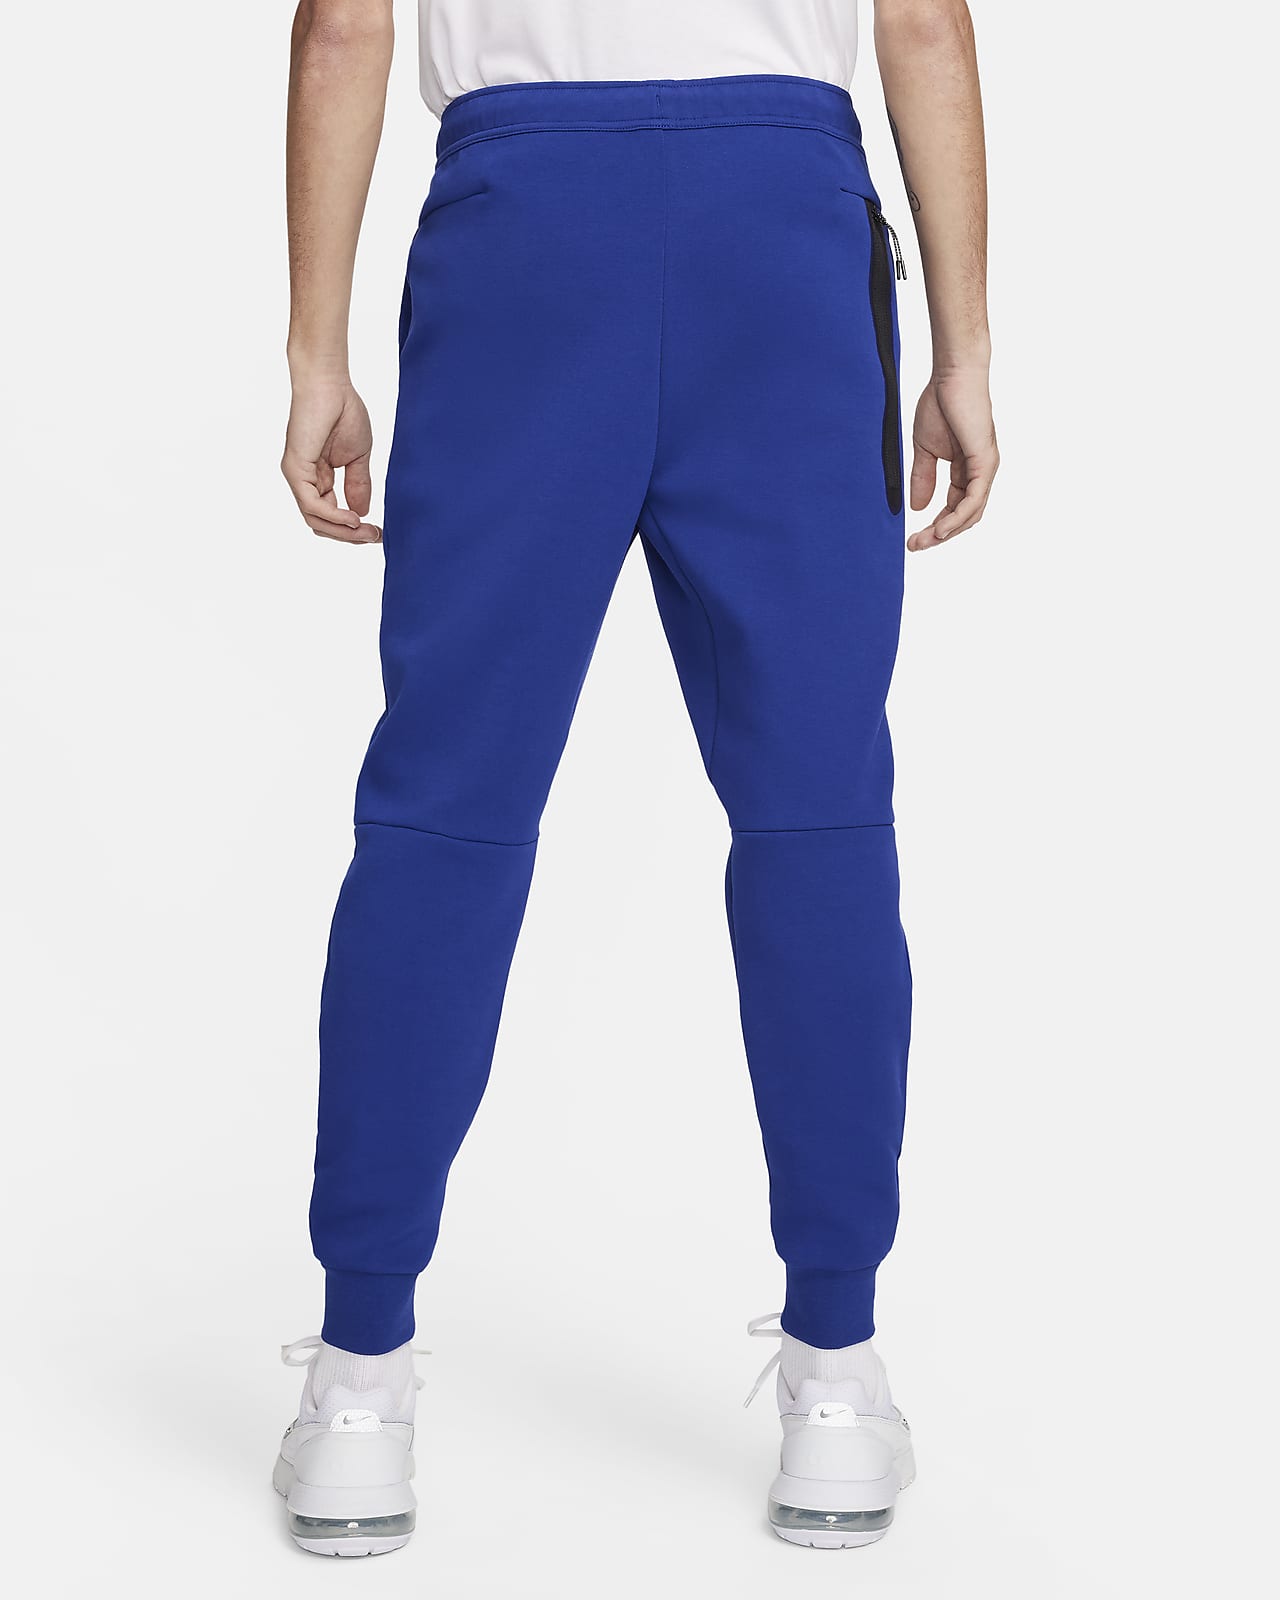 Blue Nike Pants -  Australia